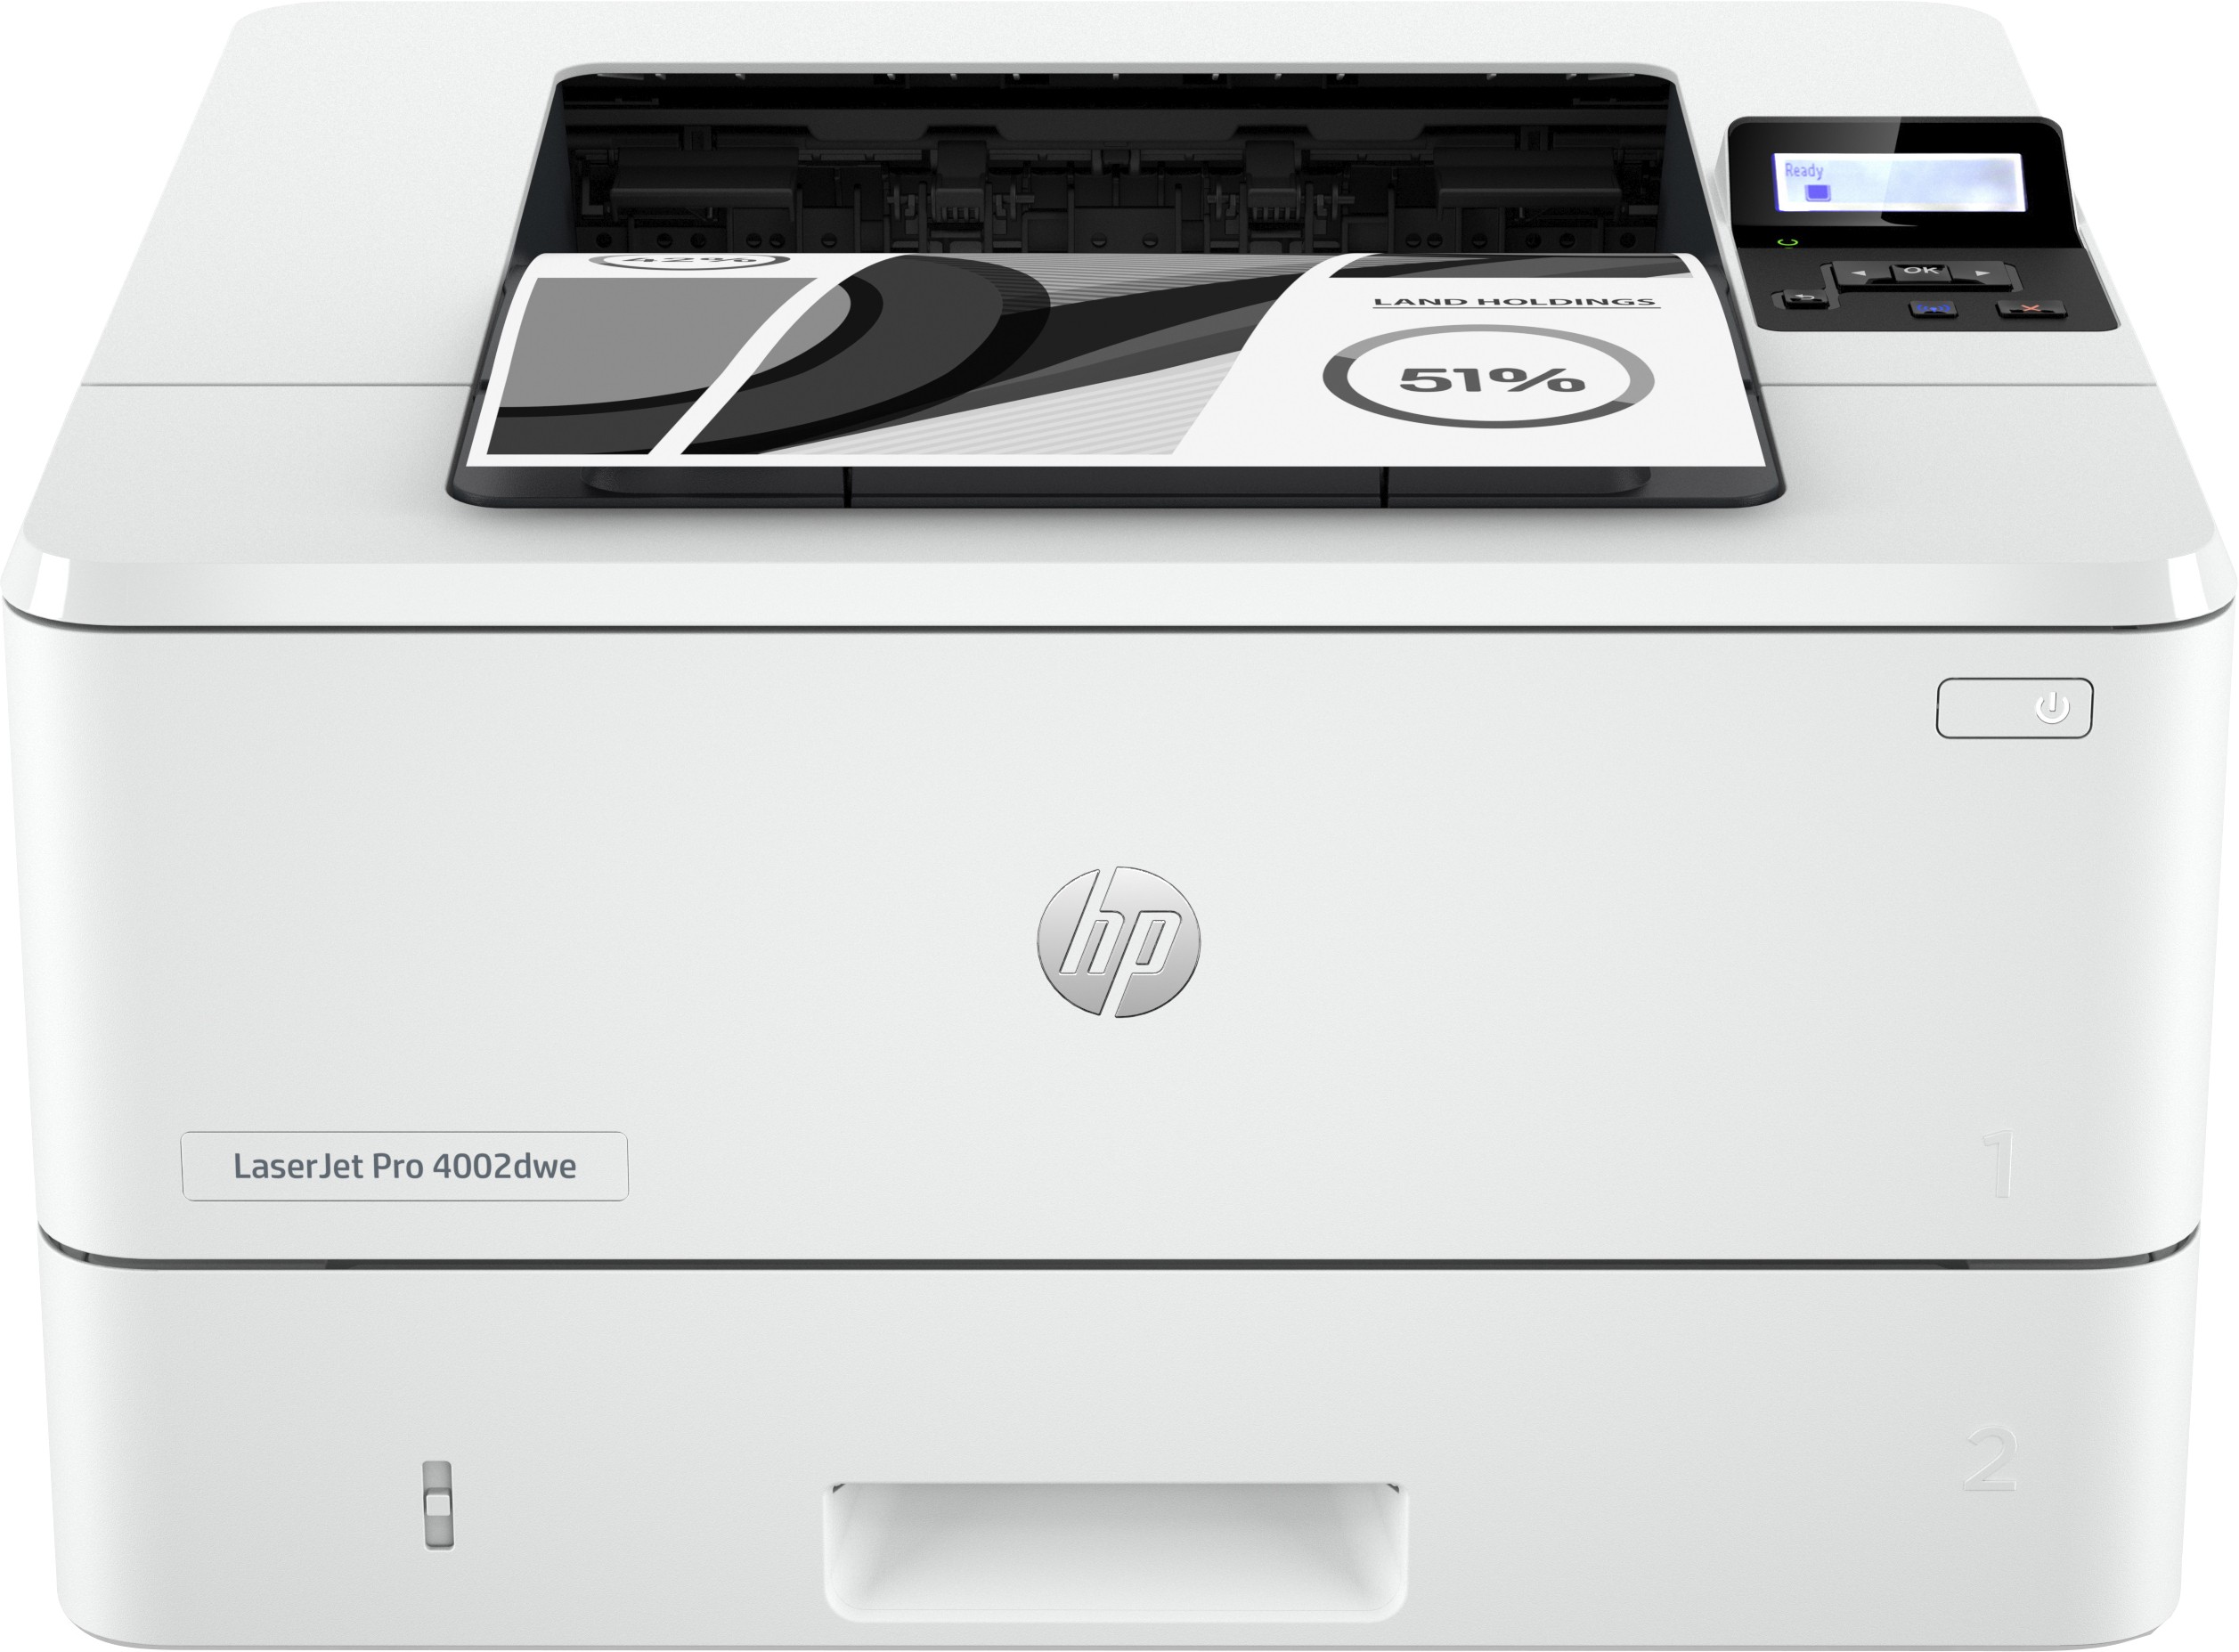 HP LaserJet Pro Stampante HP 4002dwe, Bianco e nero, Stampante per Piccole  e medie imprese, Stampa, wireless; HP+; idonea a HP Instant Ink; stampa da  smartphone o tablet - - Esseshop 